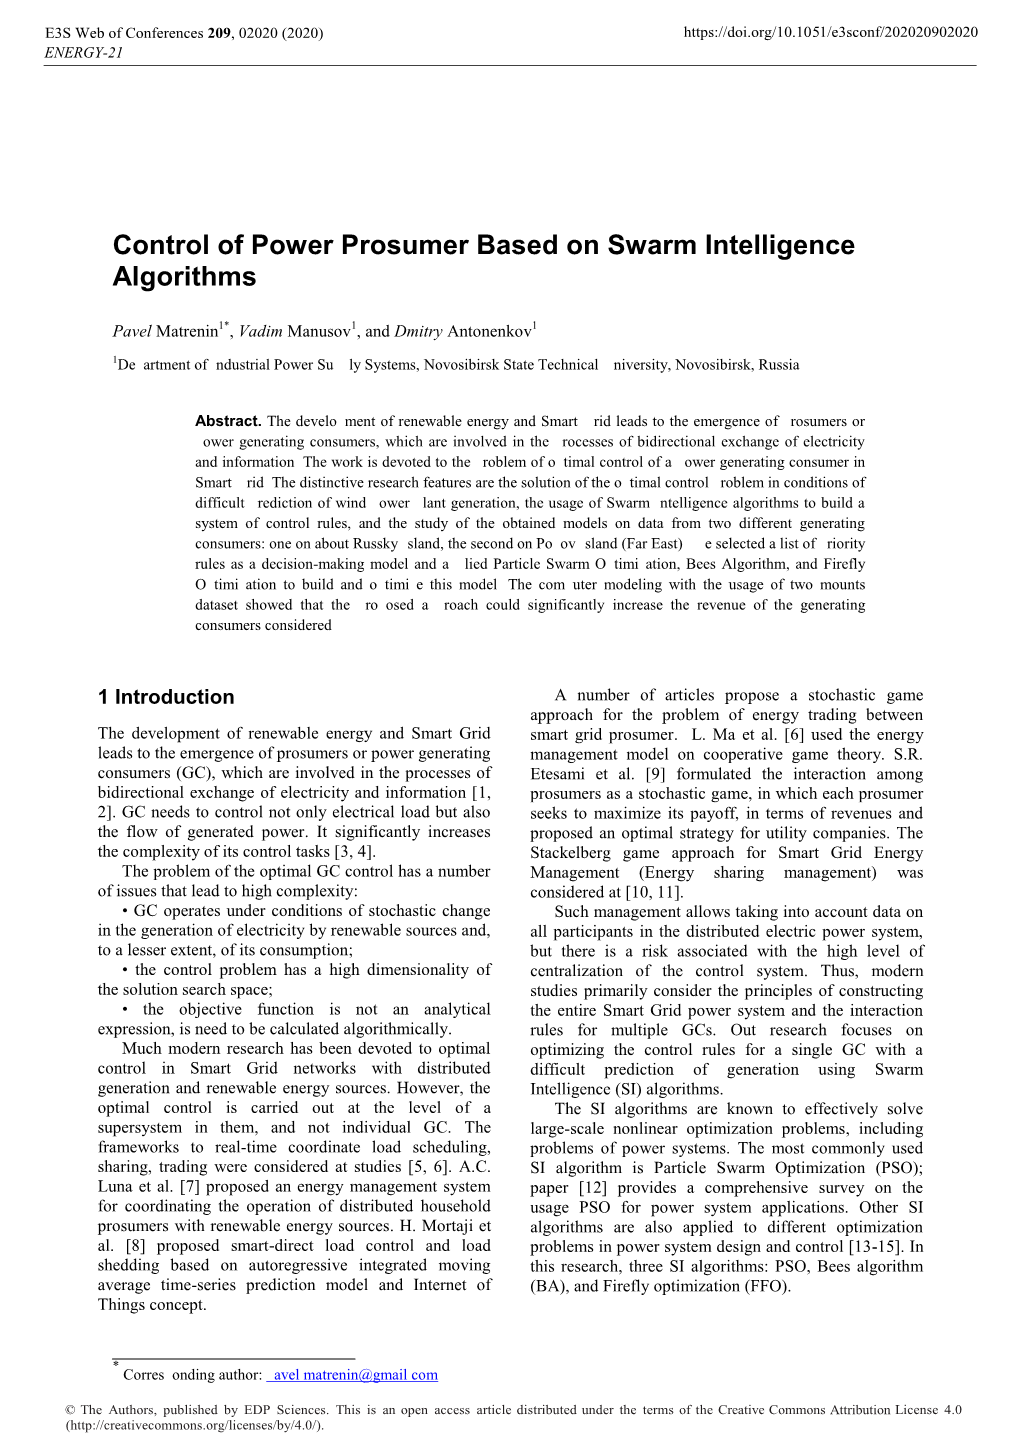 Control of Power Prosumer Based on Swarm Intelligence Algorithms